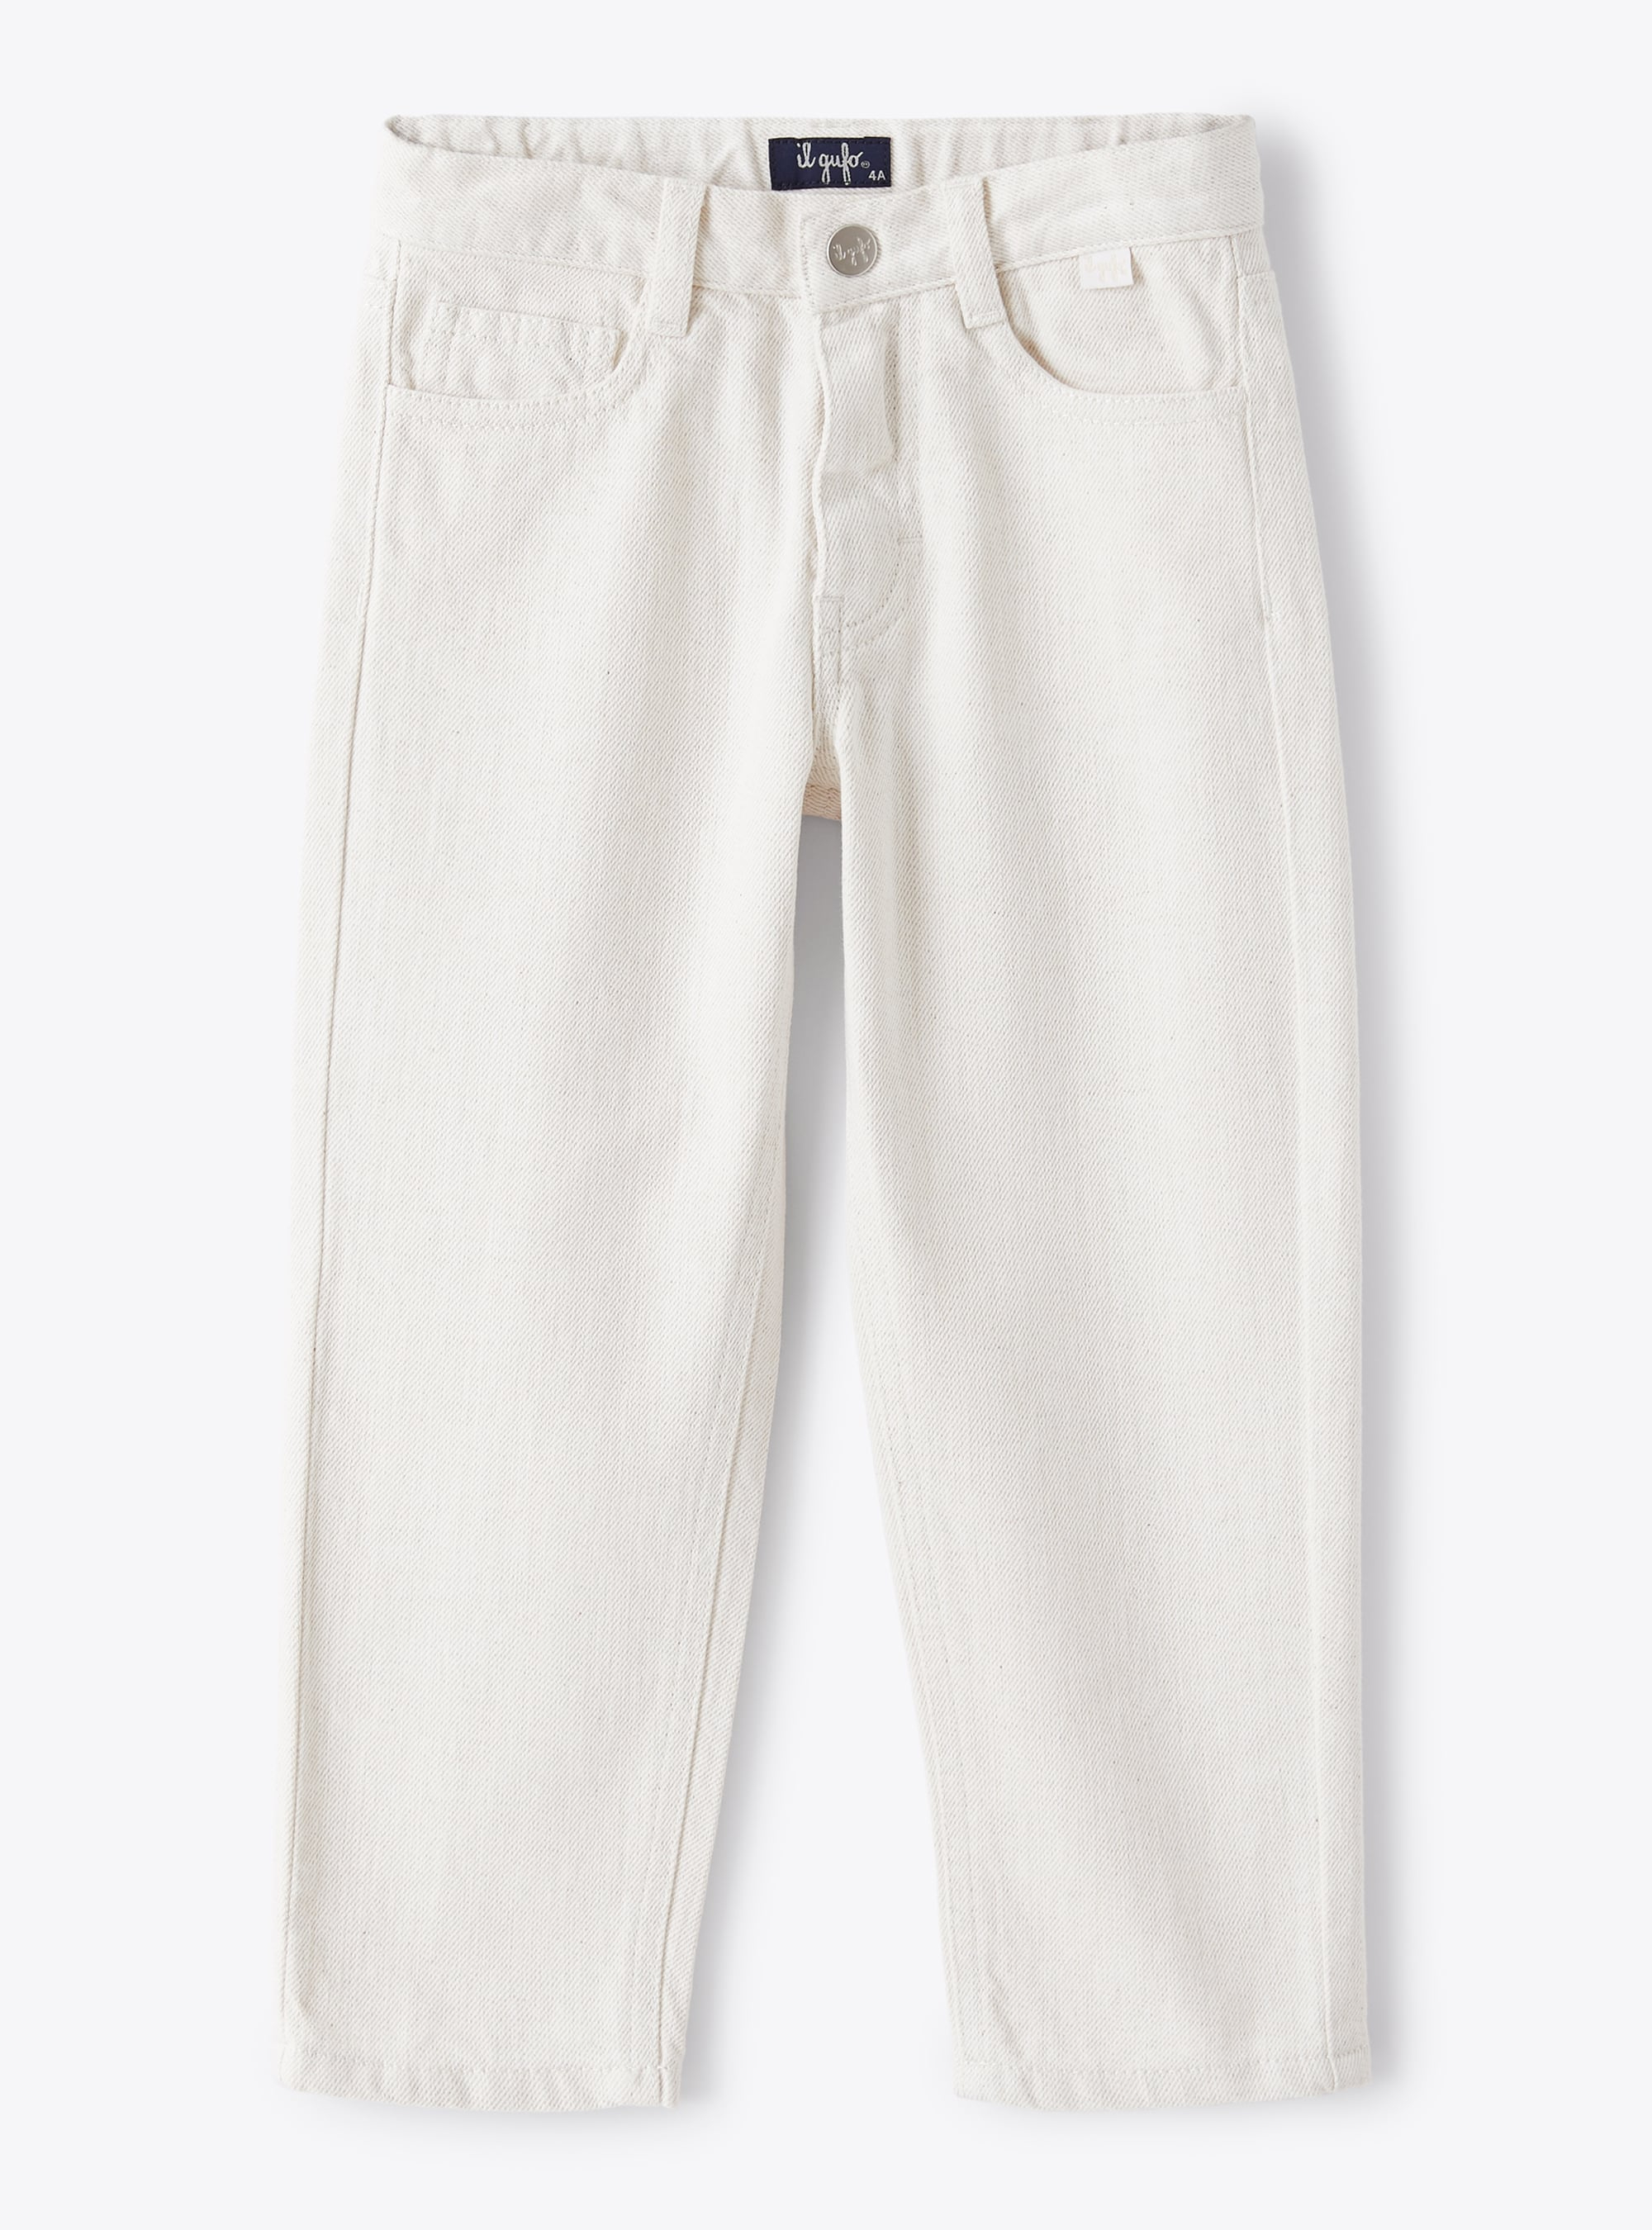 Trousers in white cotton-and-linen bull denim - Trousers - Il Gufo